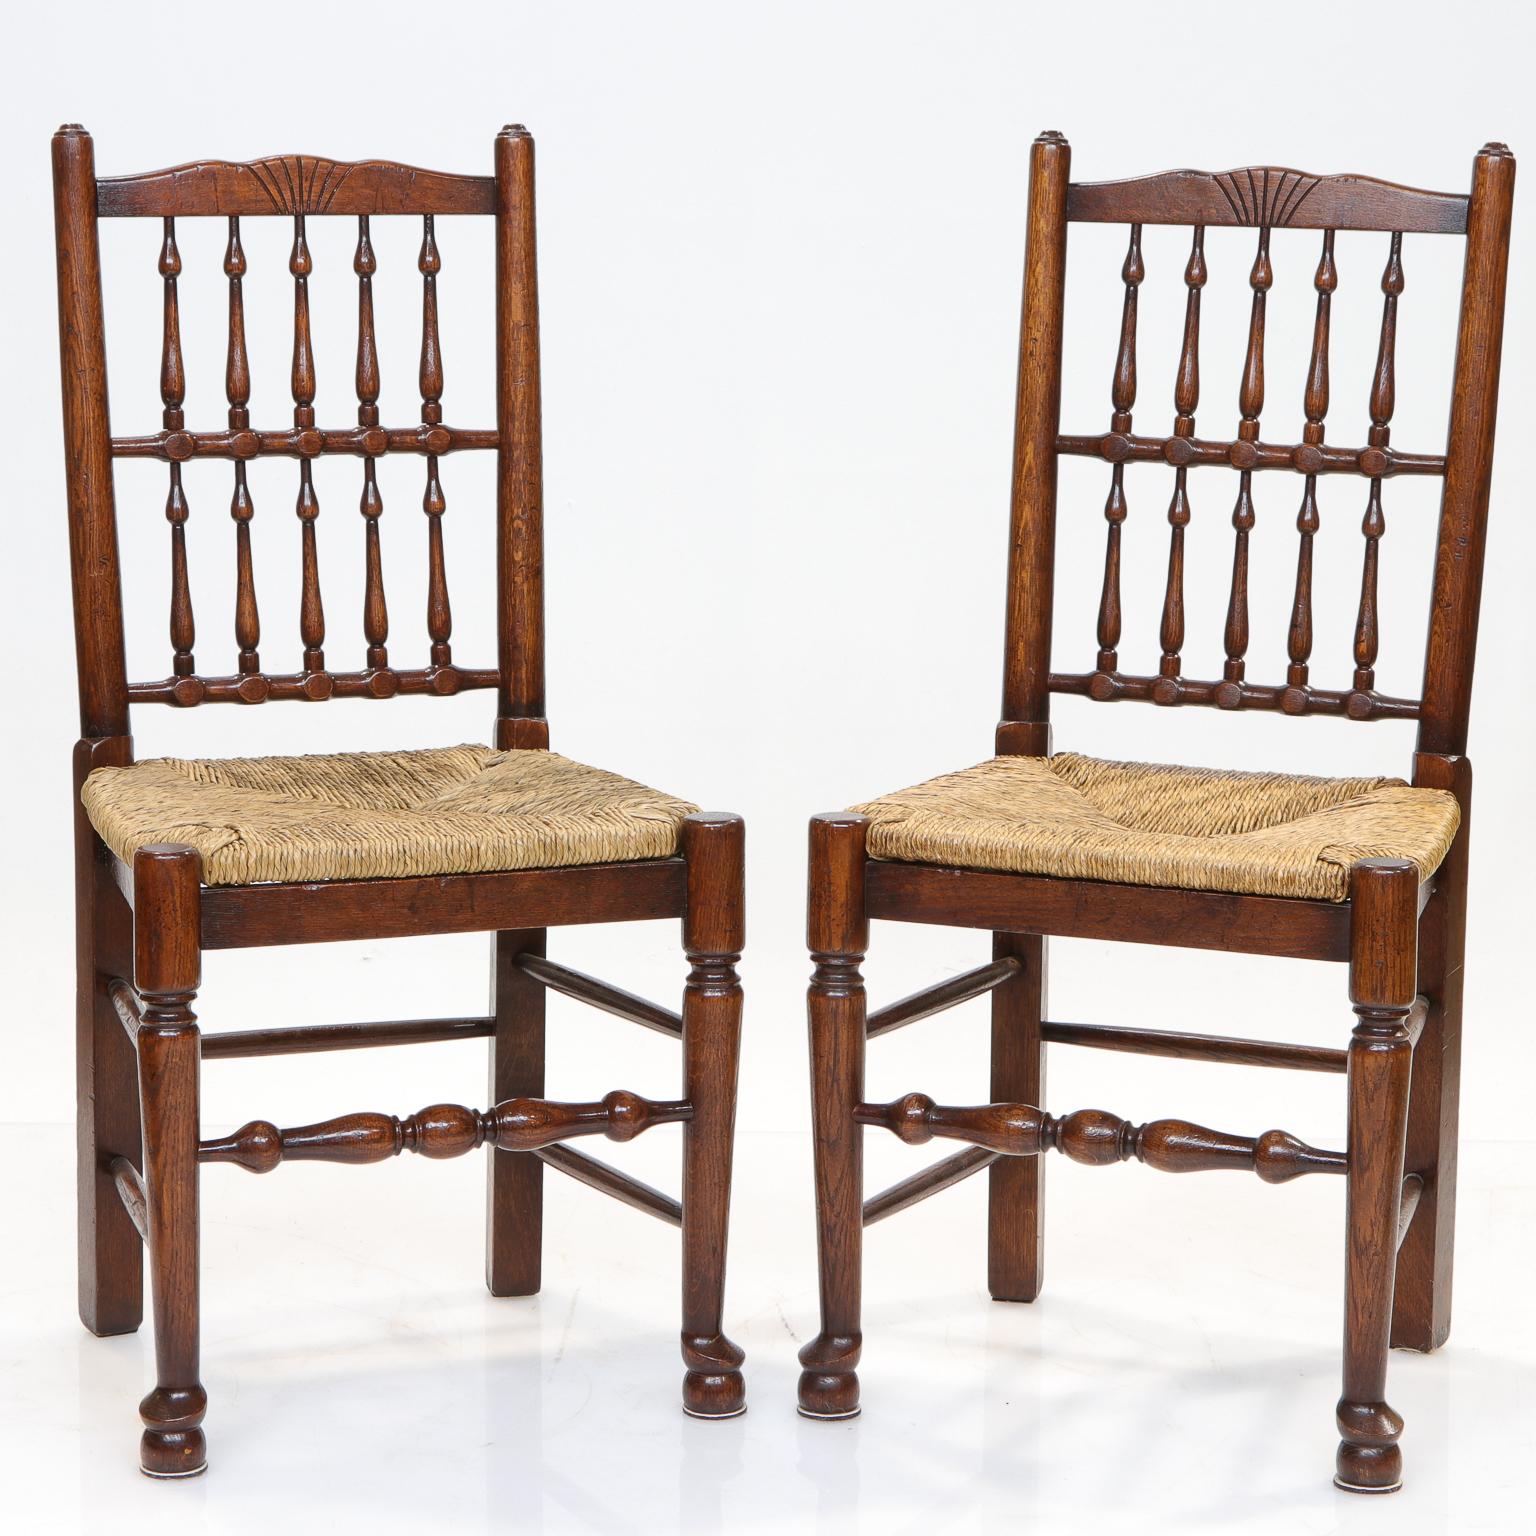 Set of 8 Lancashire dining chairs 

Very nice set of Lancashire dining chairs with rush seats. English oakwood. Spindle backs. 
Measures: 19.25